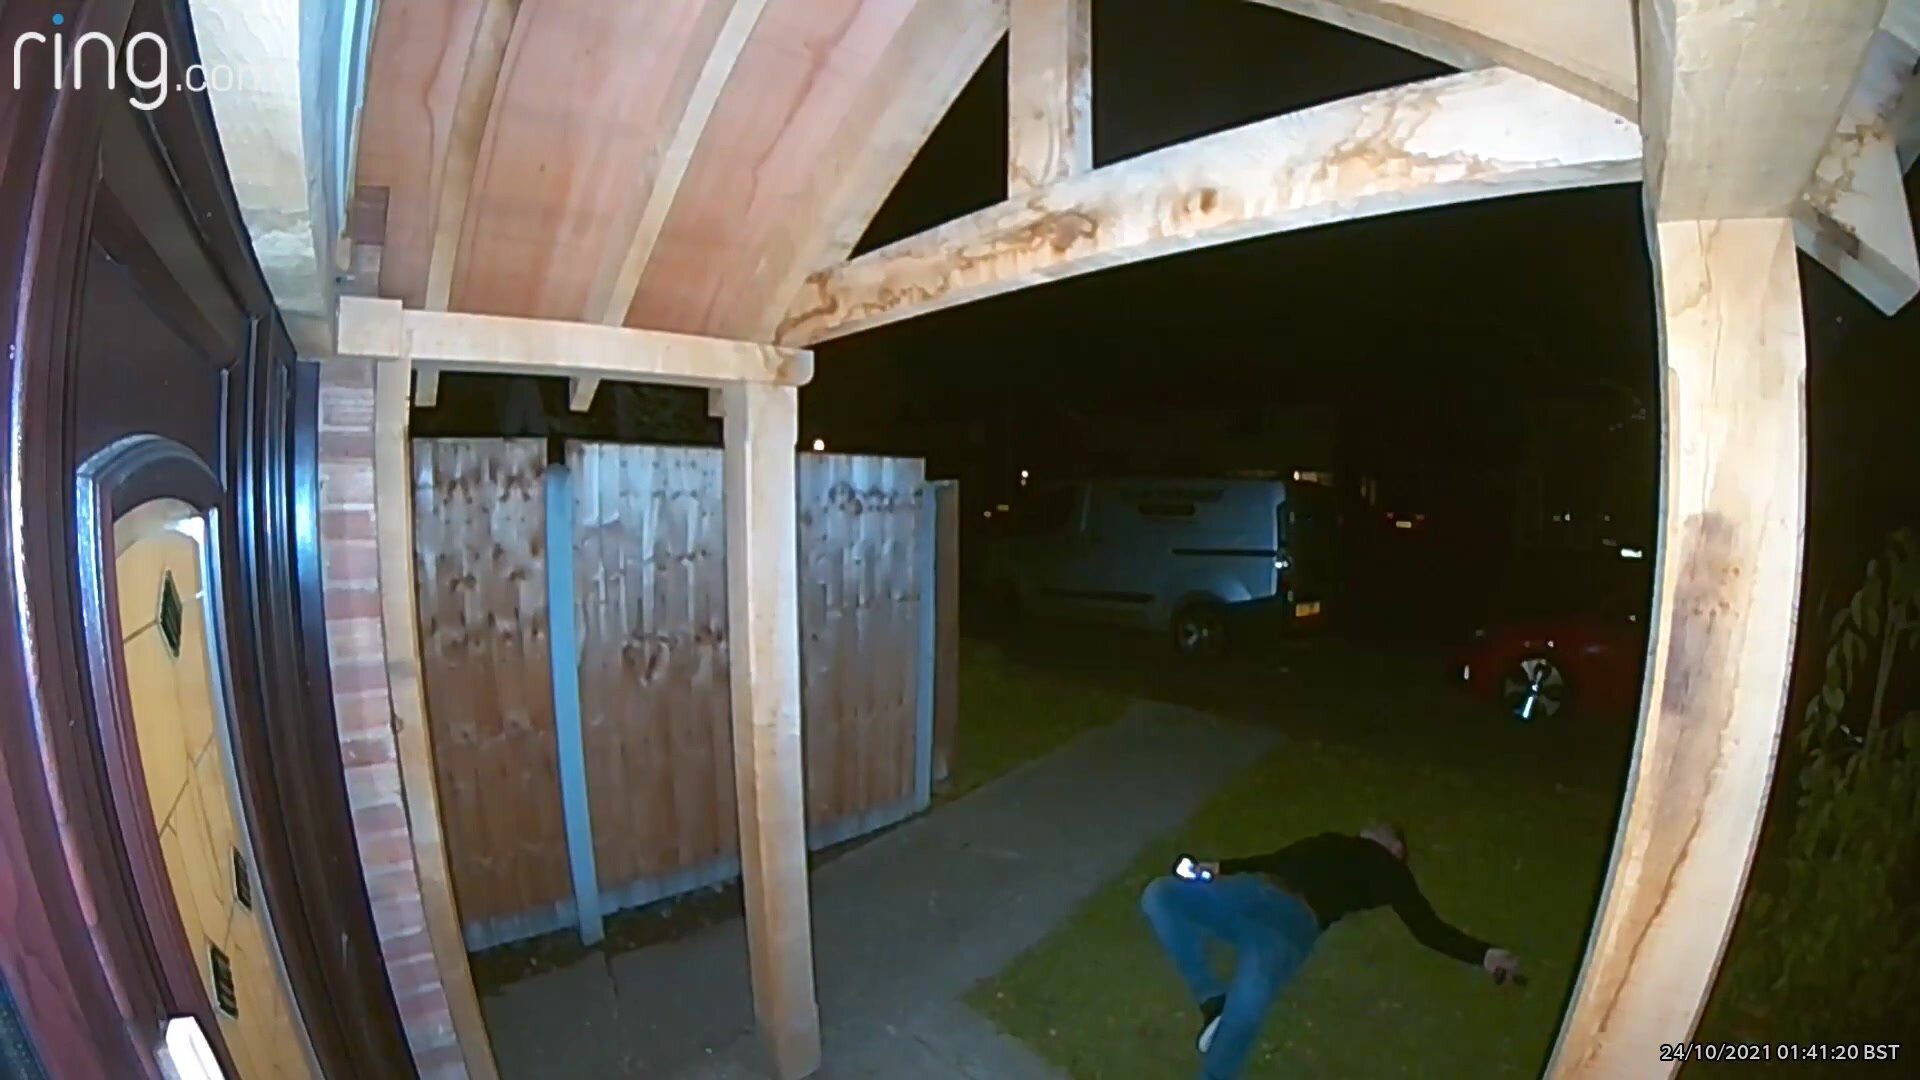 Drunk man farts twice on ring doorbell